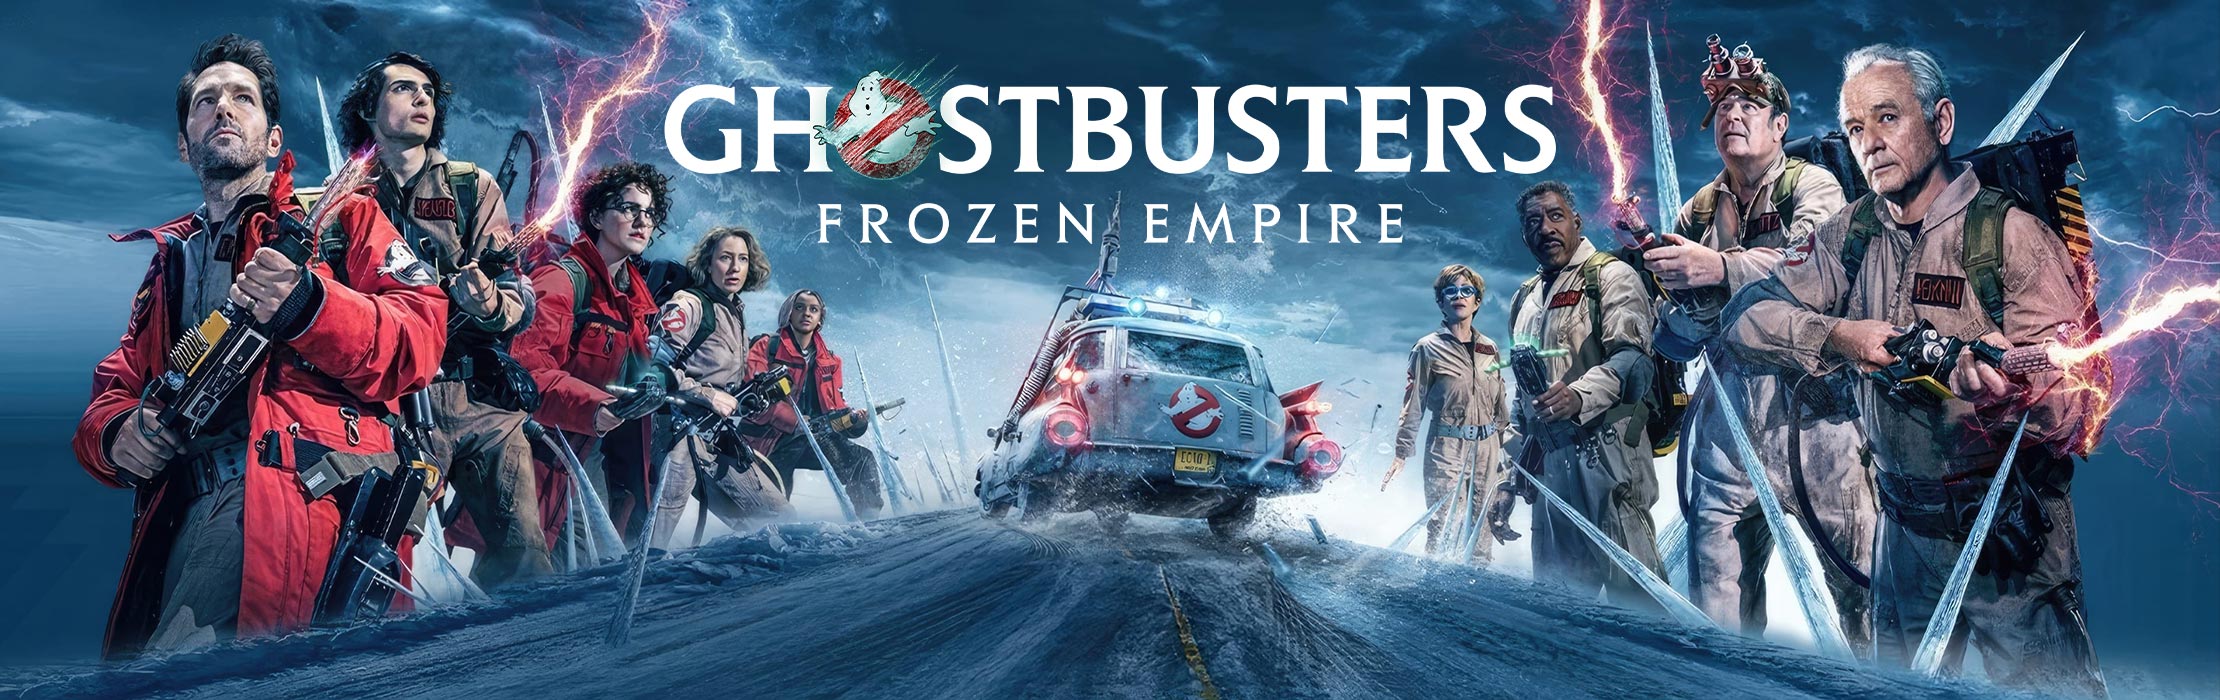 /film/Ghostbusters:-Frozen-Empire